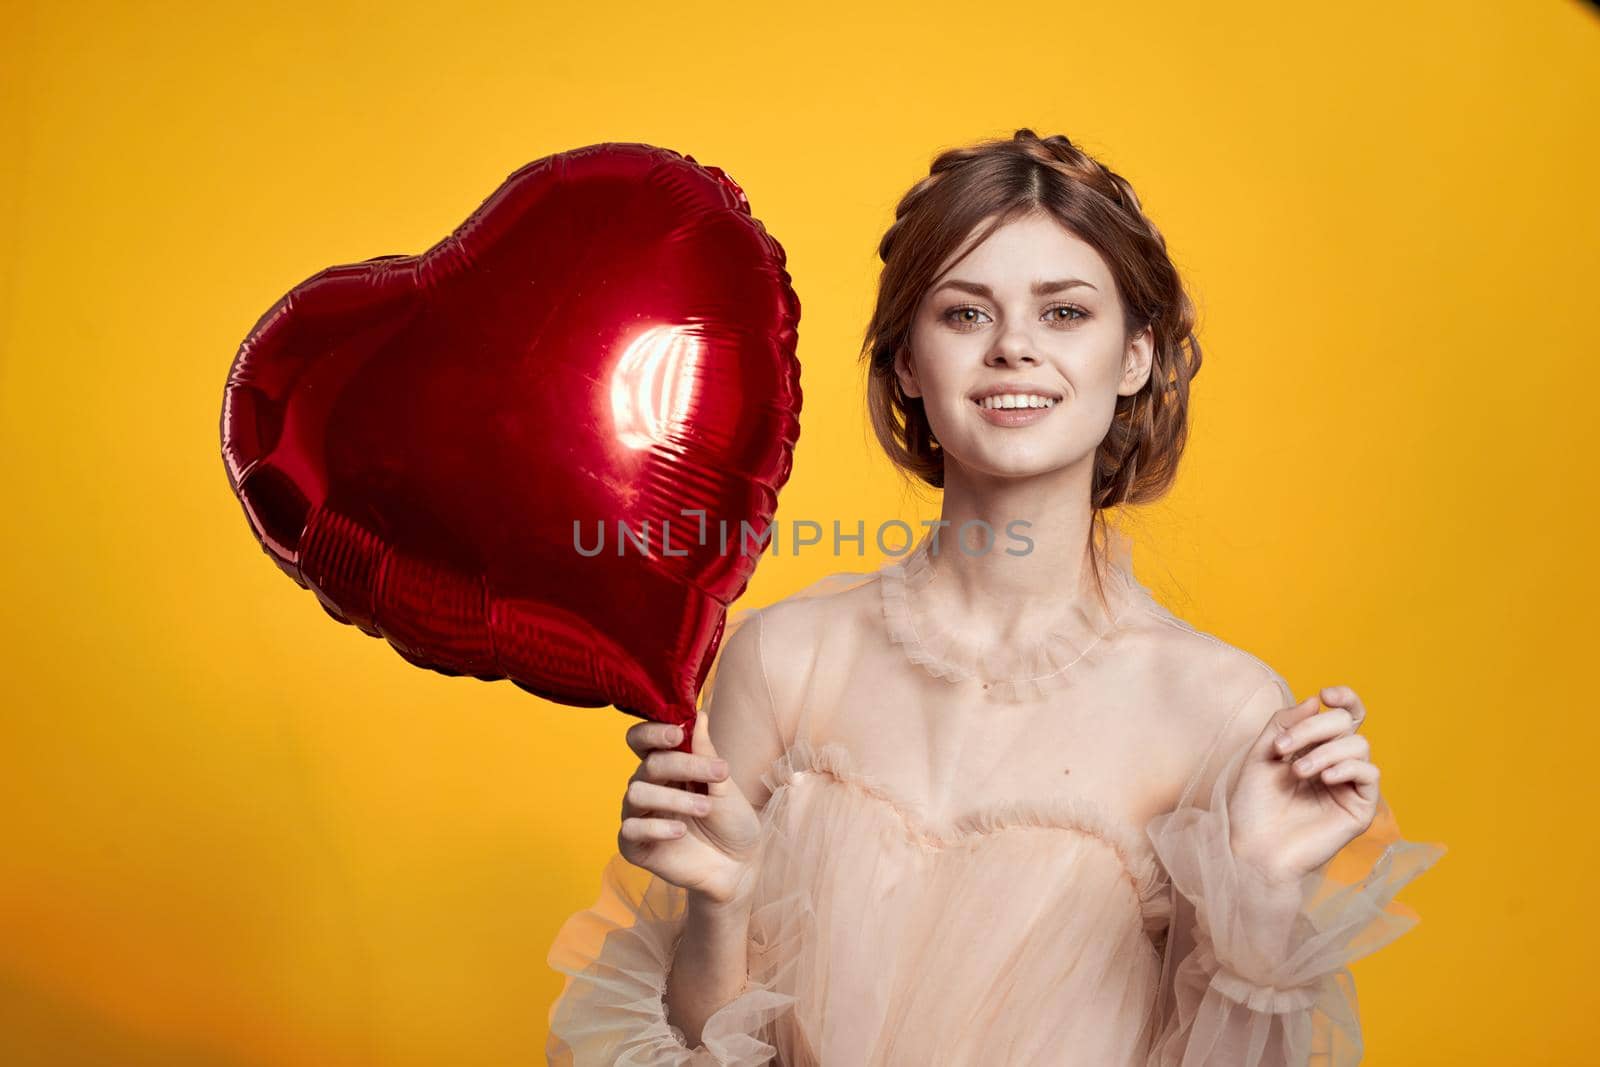 attractive woman heart balloon fun fashion glamor. High quality photo